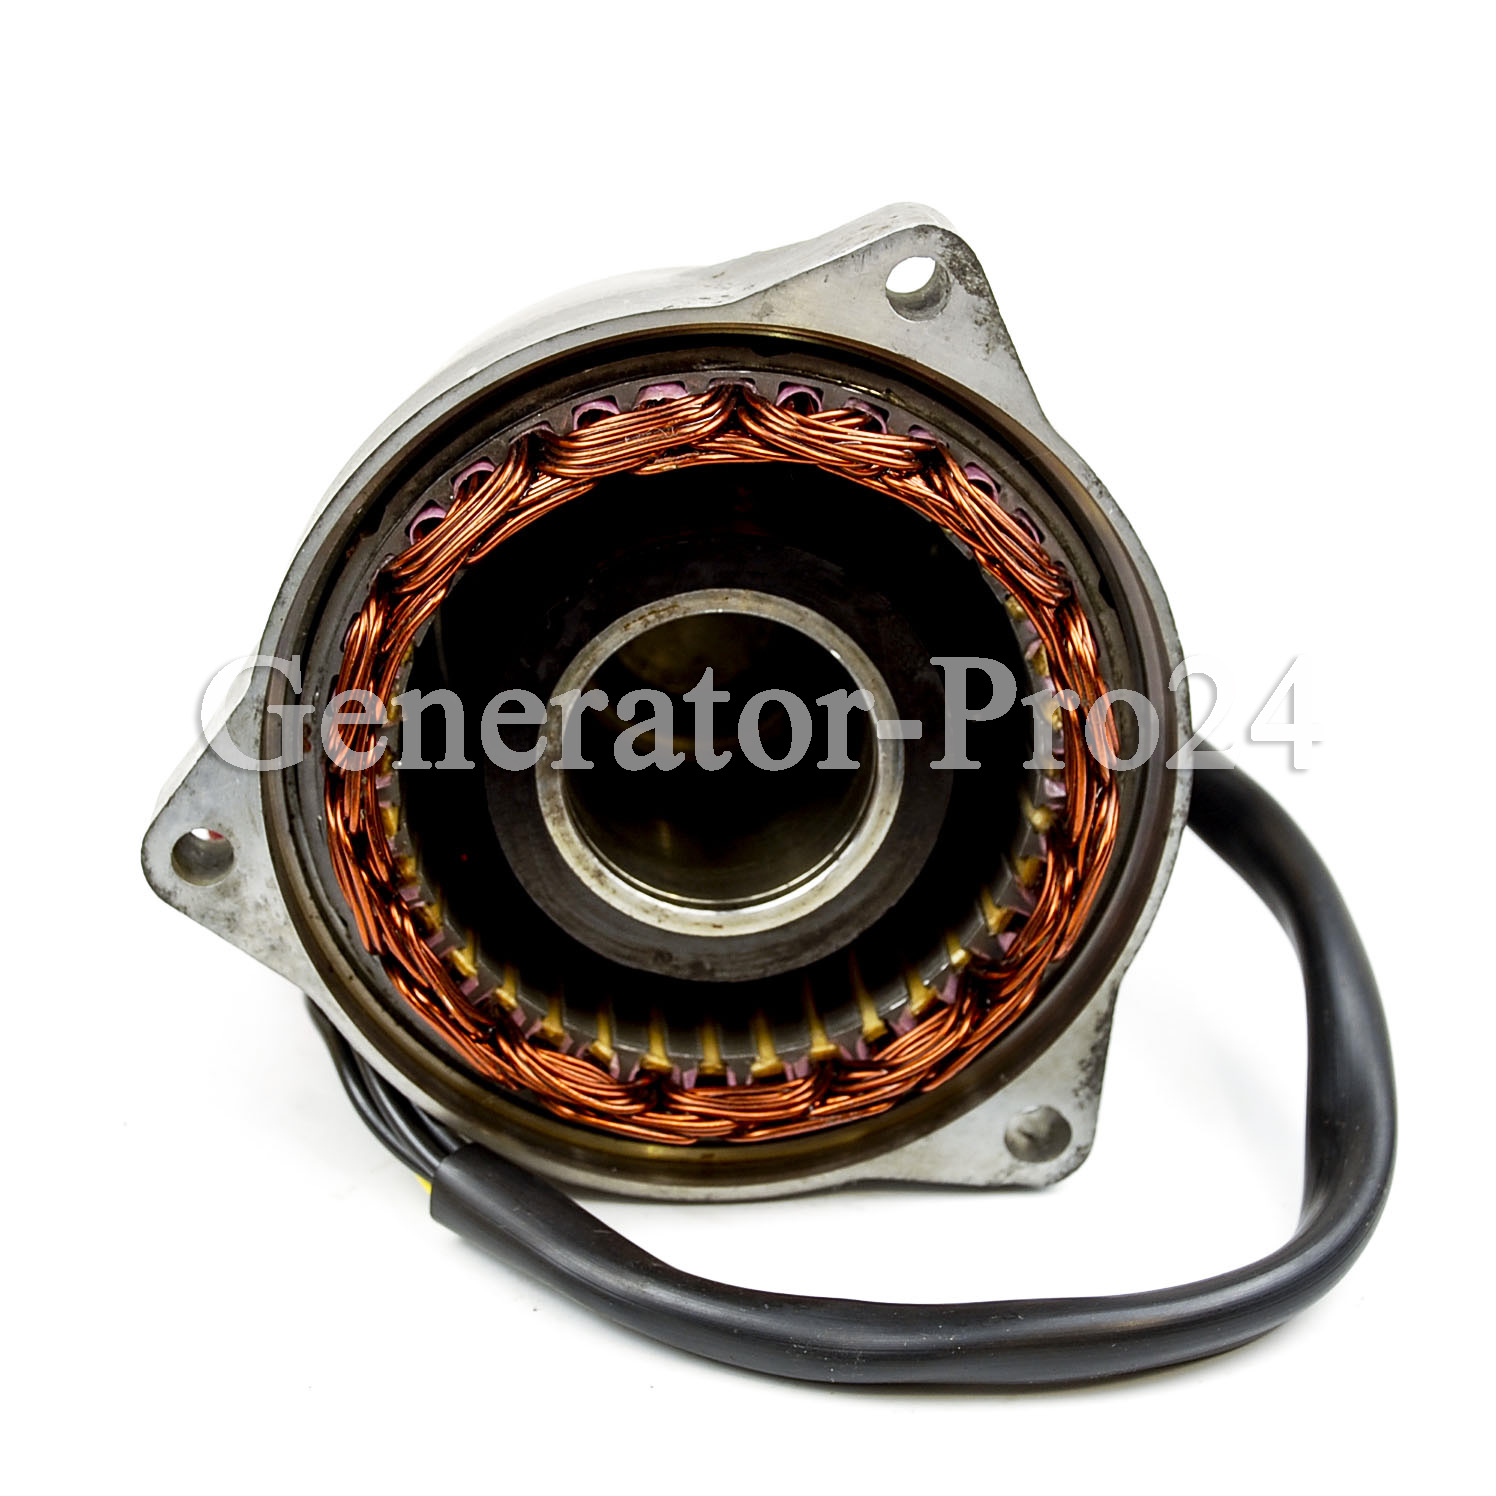 31130MS2611  | Generator-Pro24  